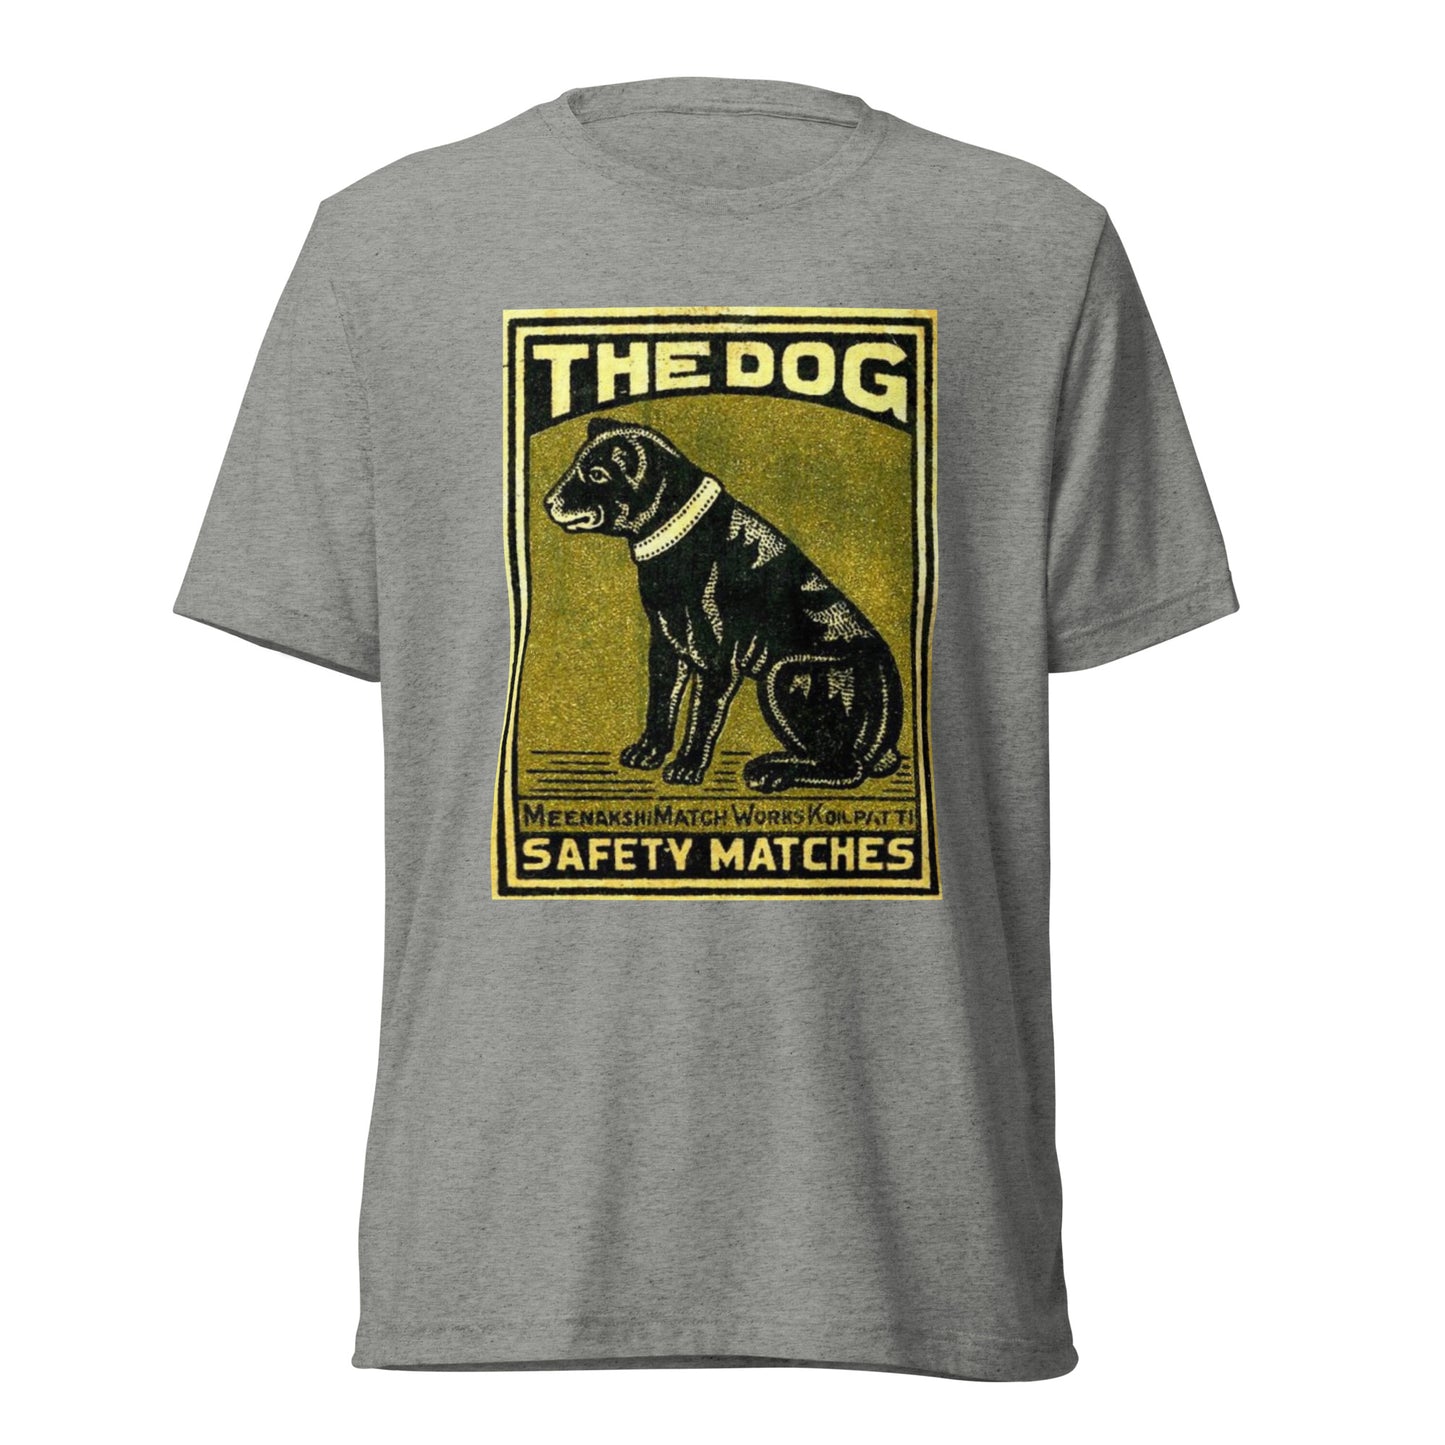 The Dog Short sleeve t-shirt